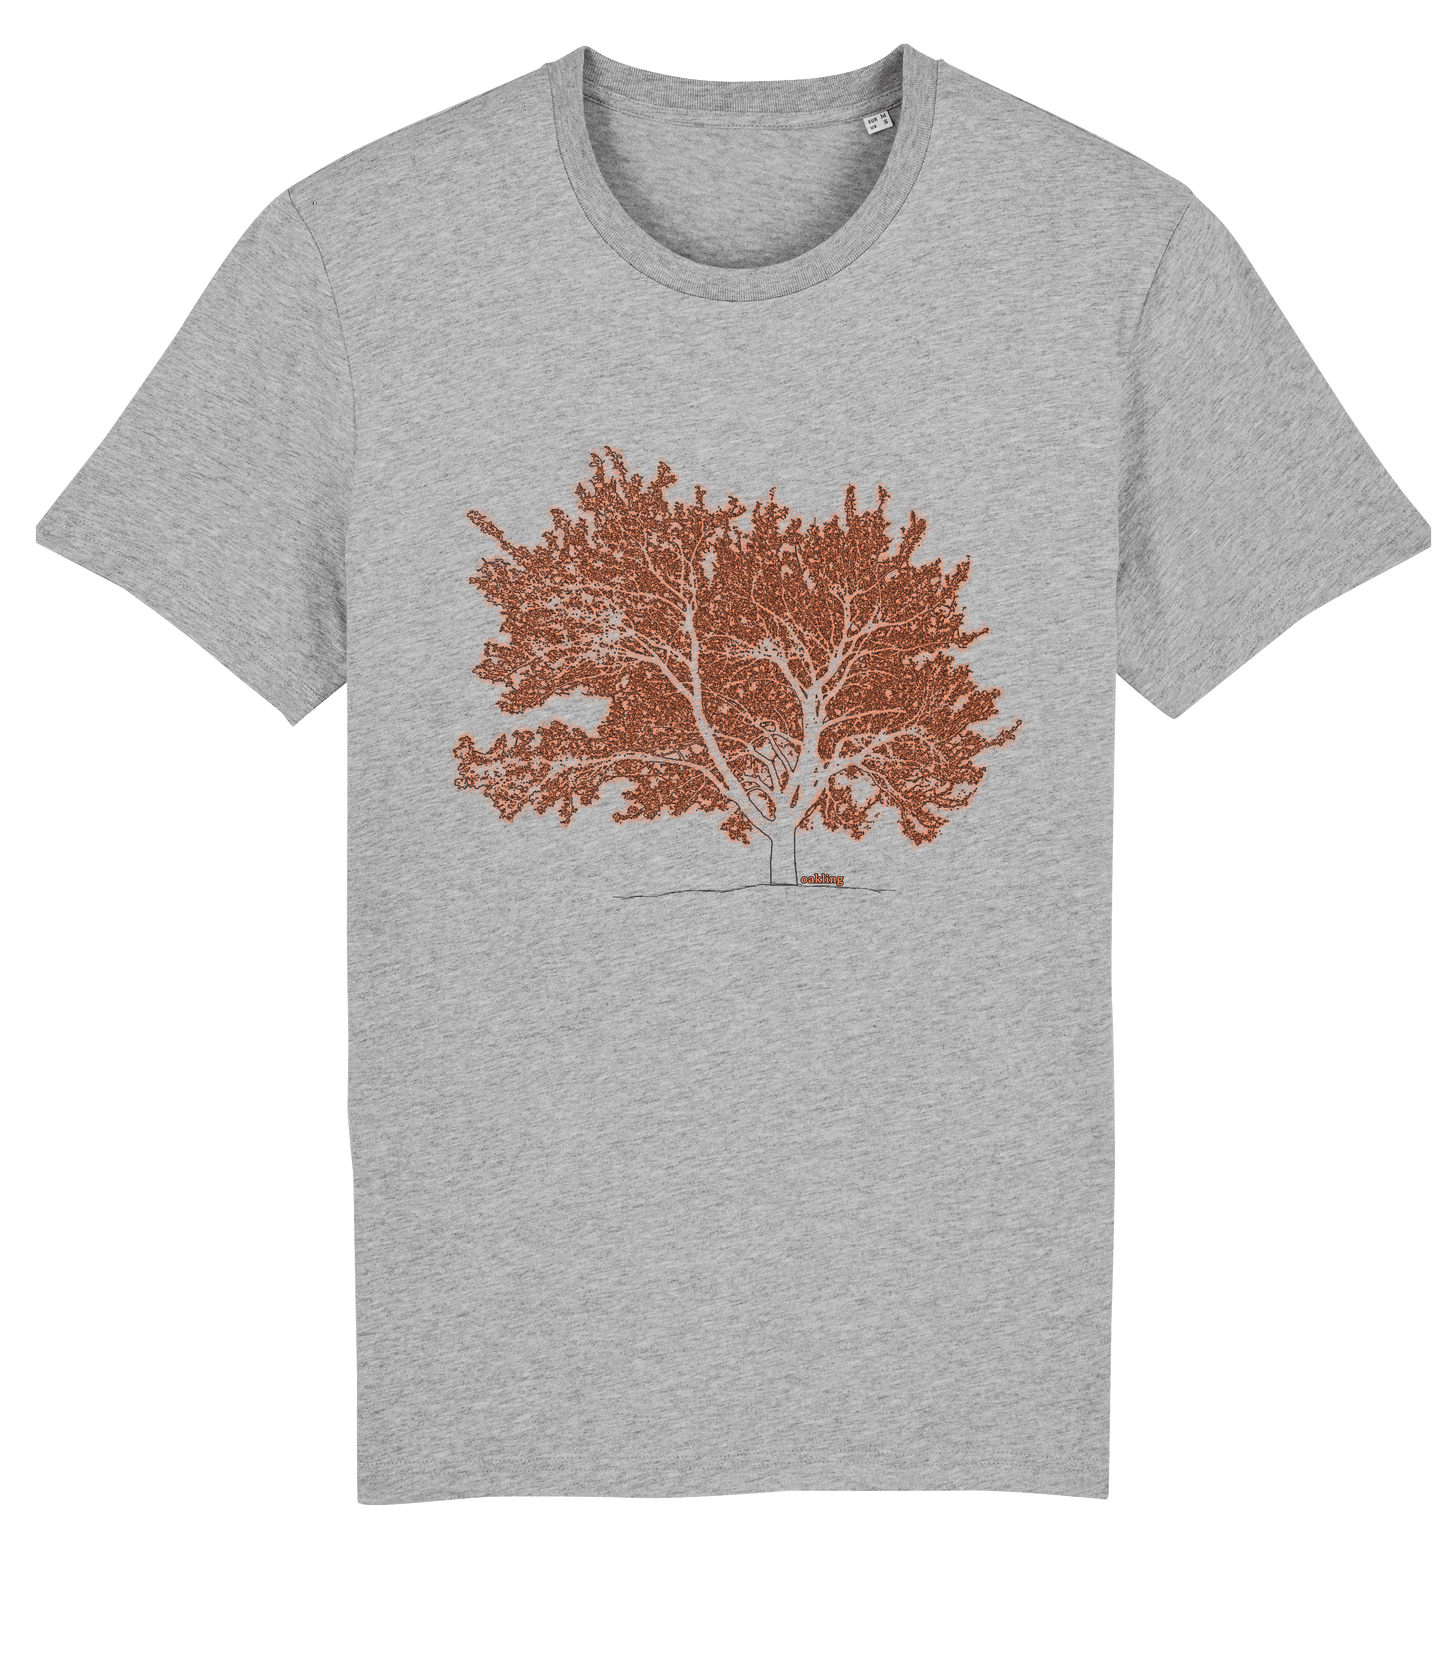 Organic Shirt - The Tree